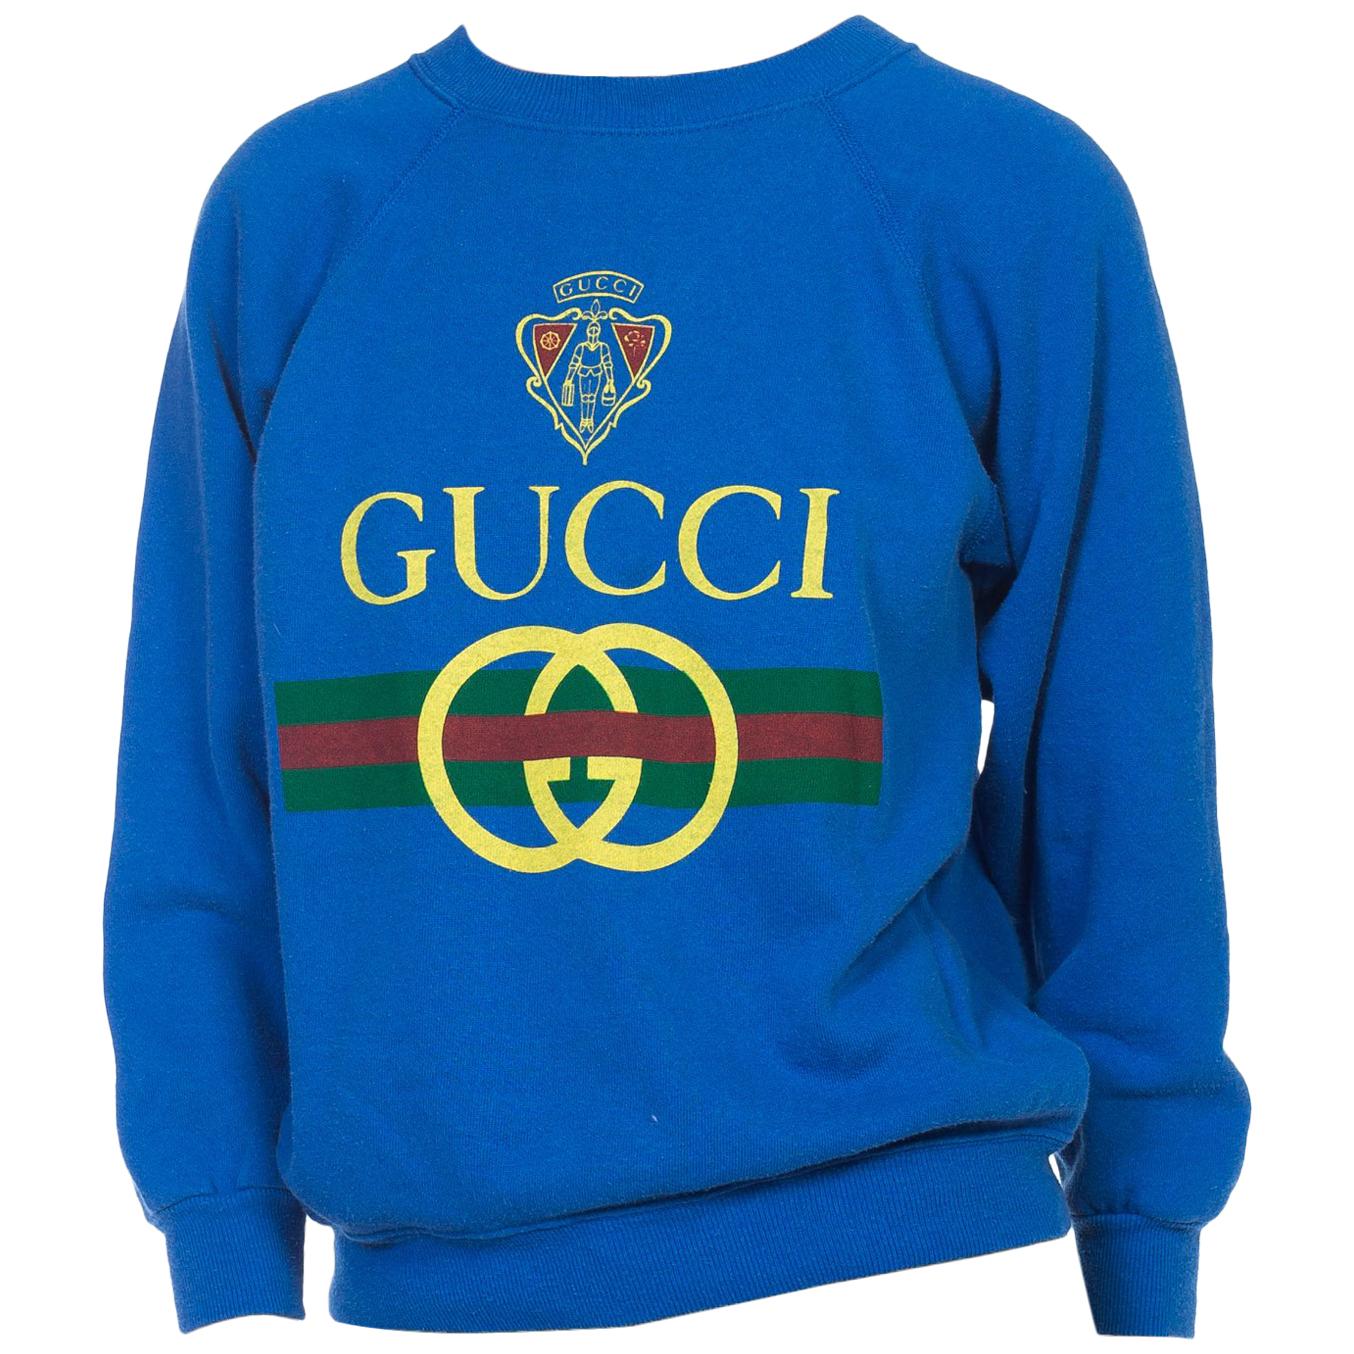 1980s Blue Bootleg Gucci Sweatshirt